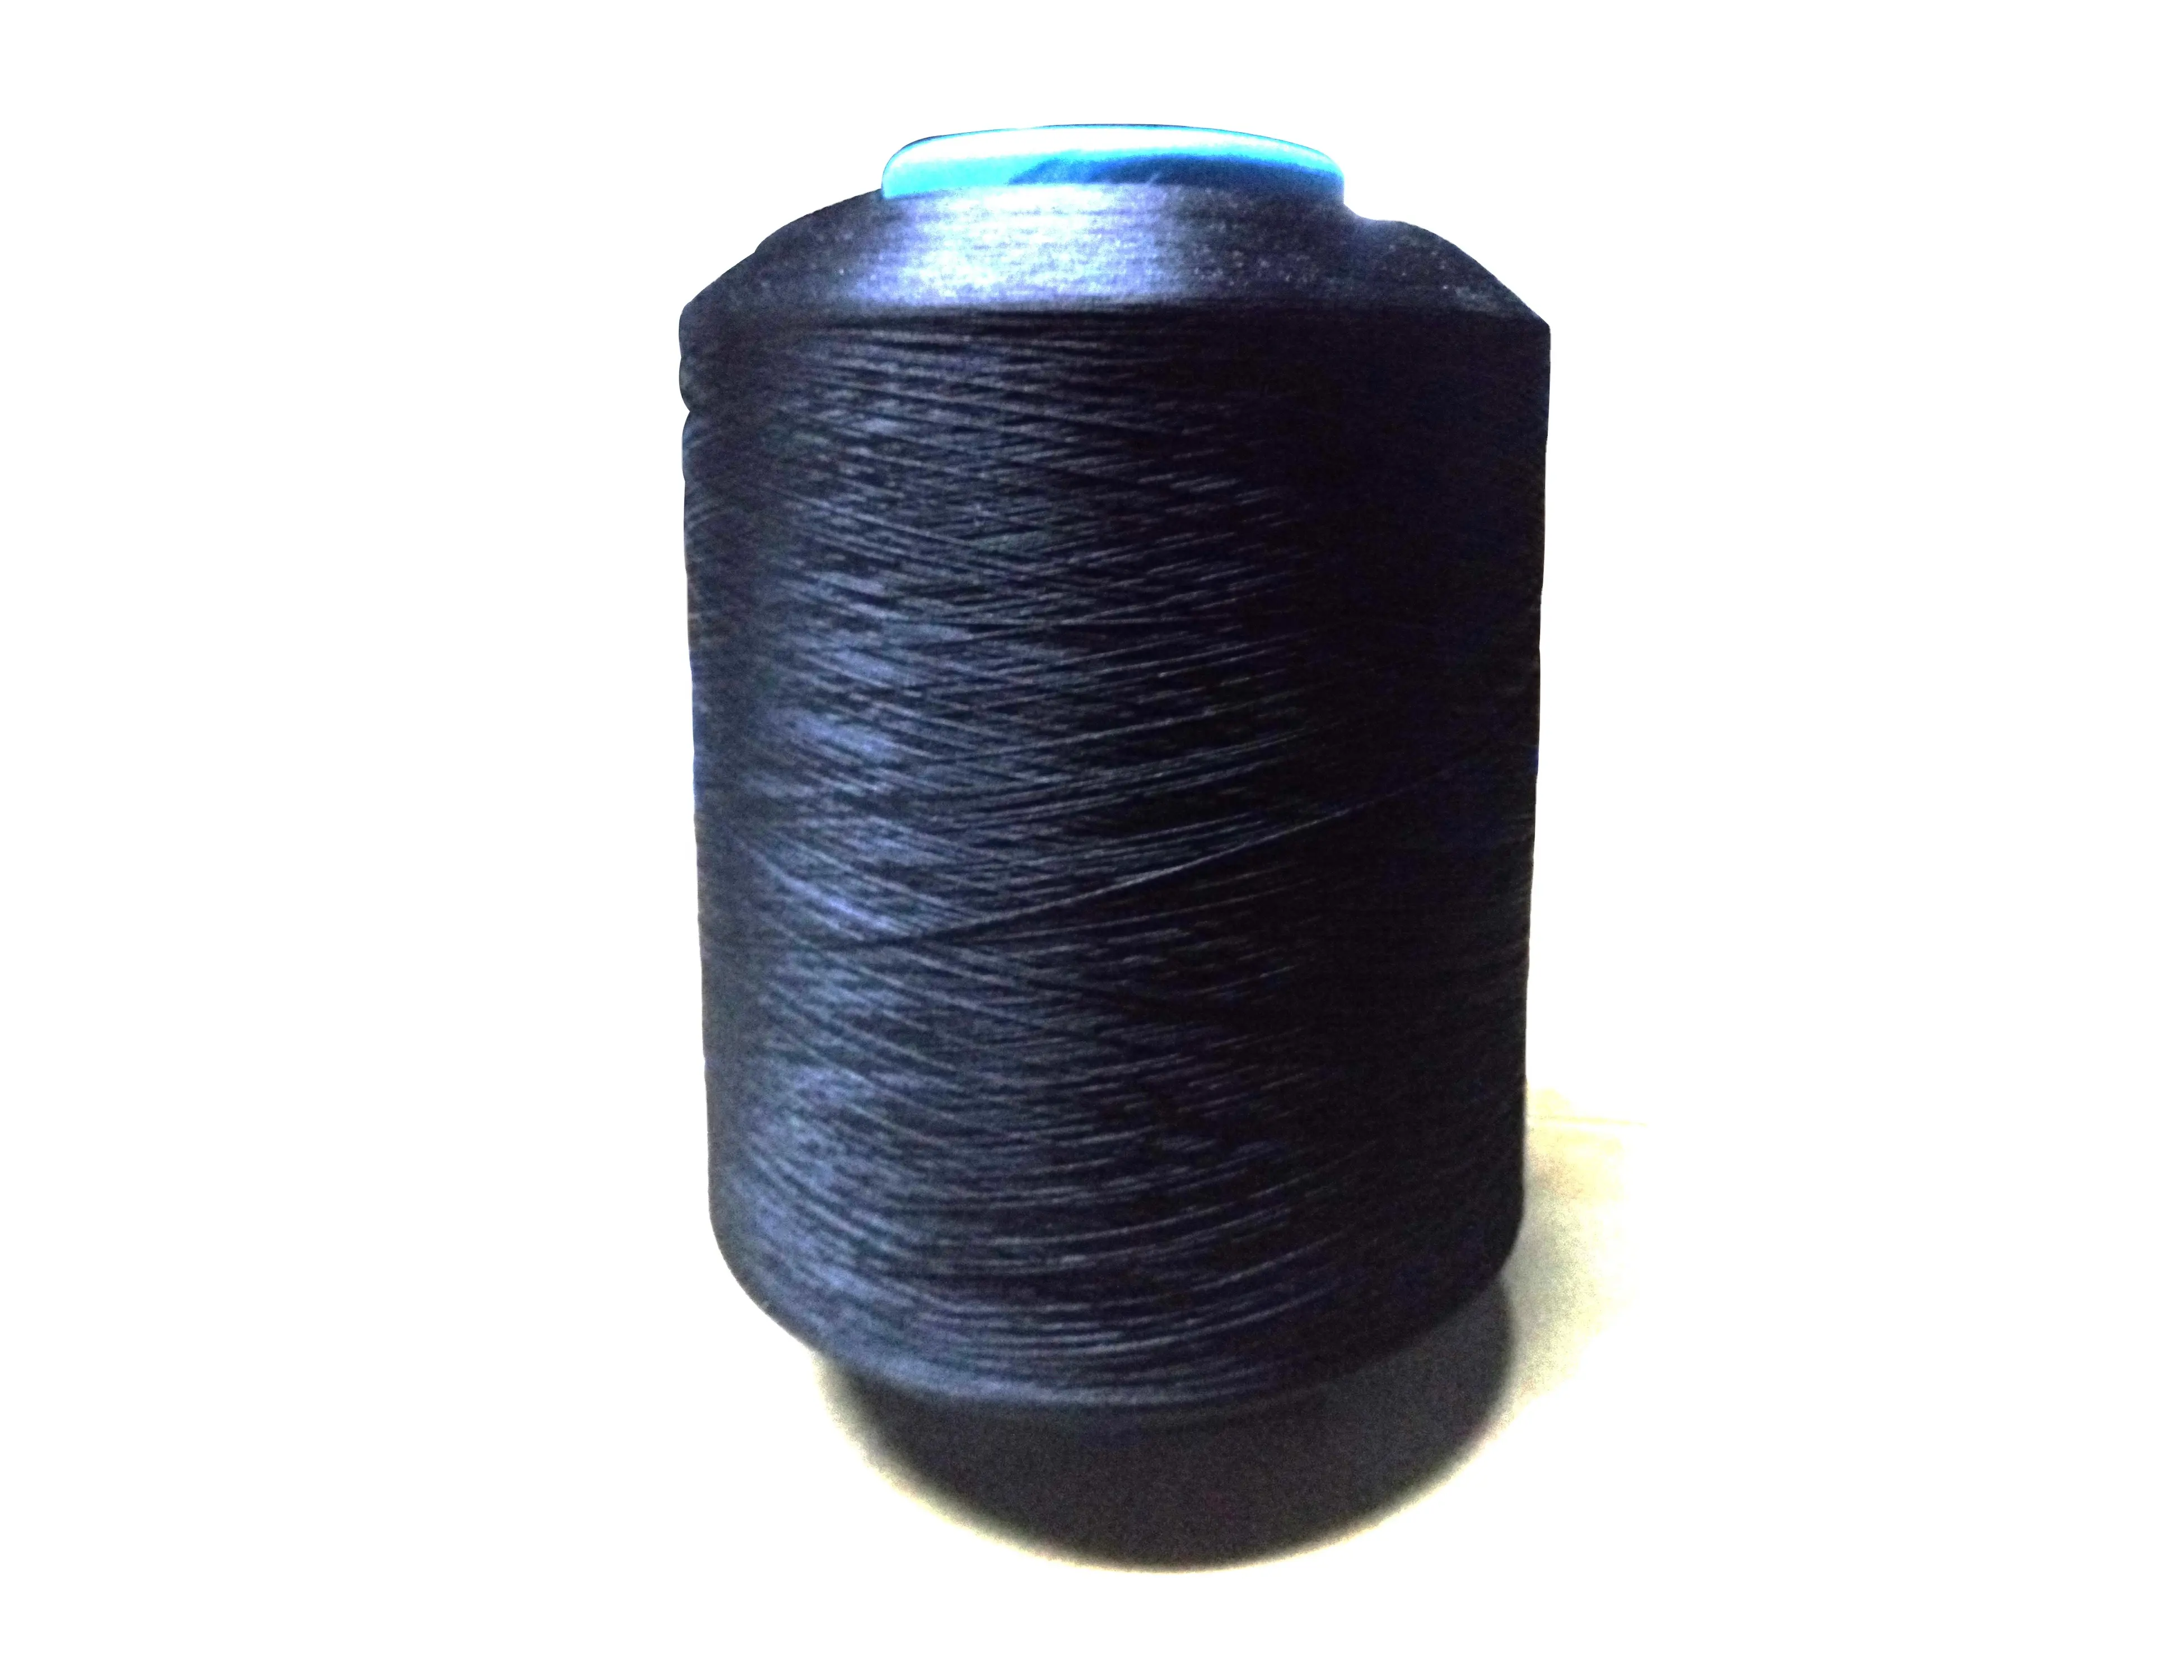 20D-600D nylon carbon fiber filament for anti-static fabric